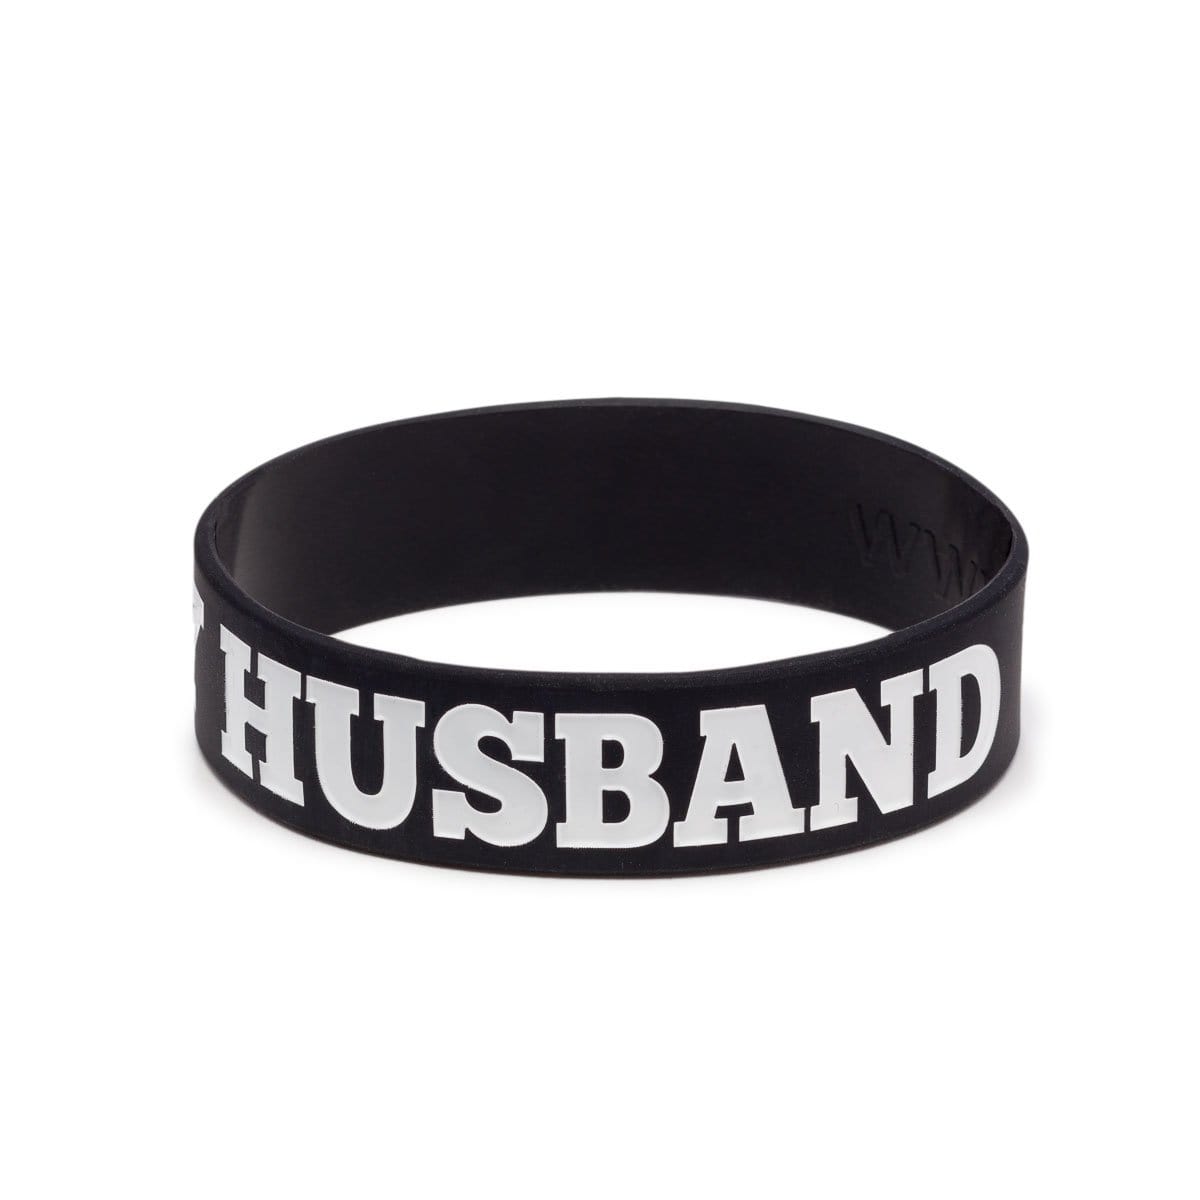 3:16 Collection Jewelry I Love My Husband Wristband